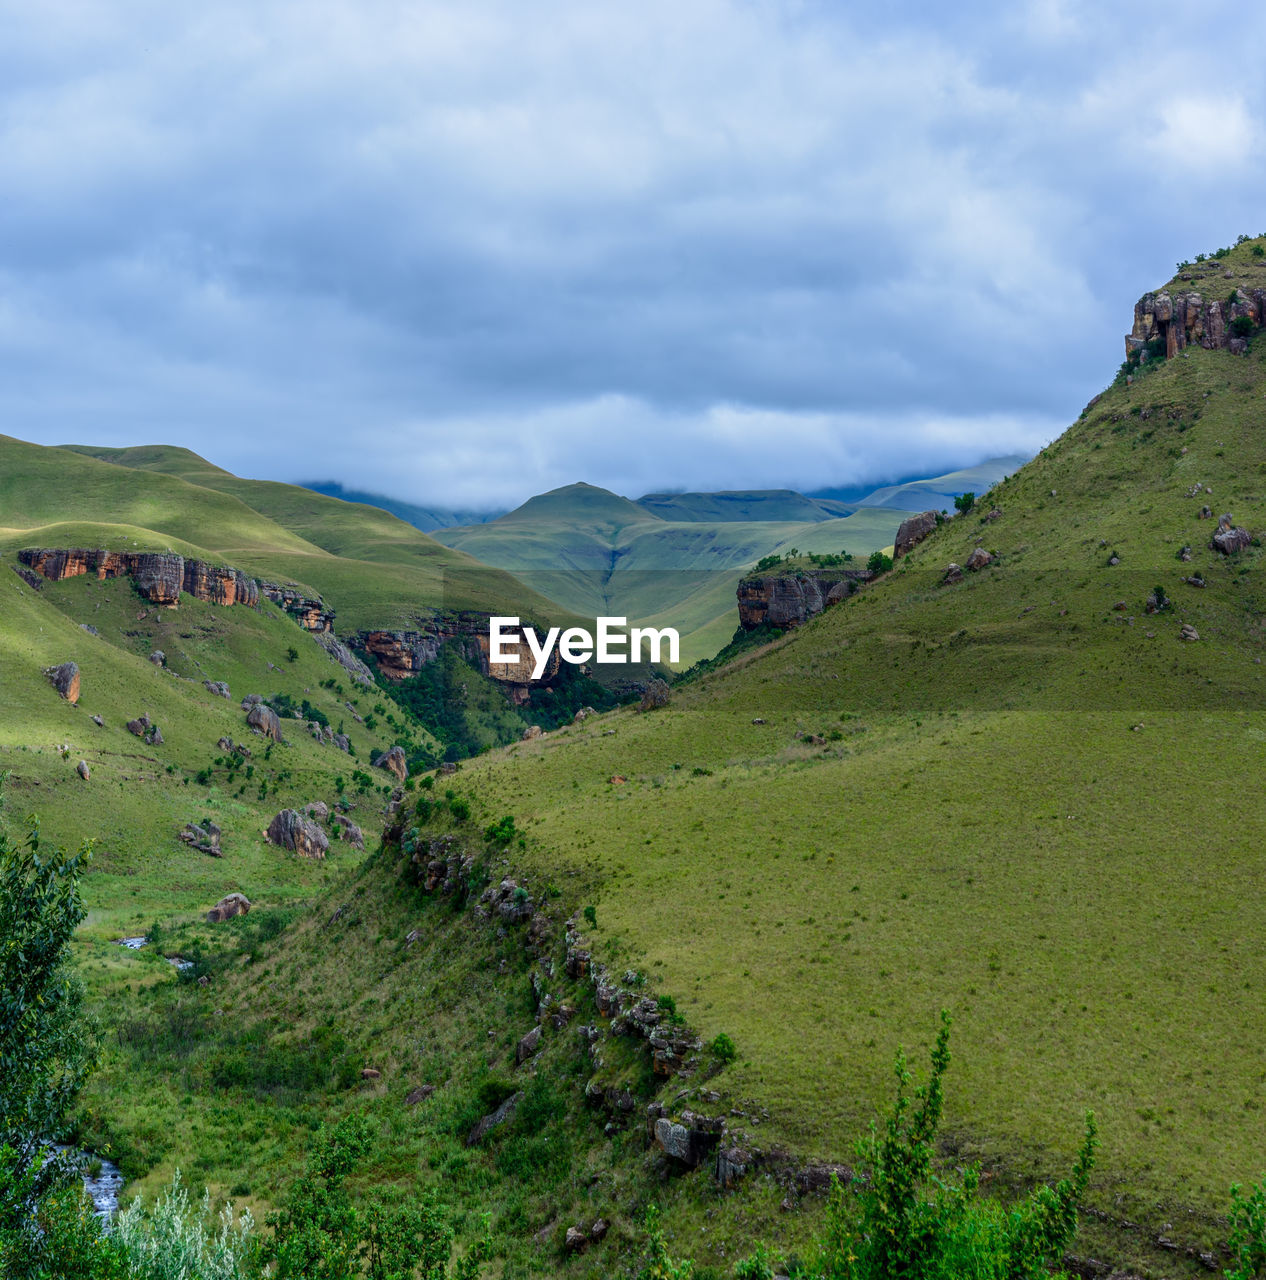 South africa drakensberg national park,green giants castle scenic panorama 